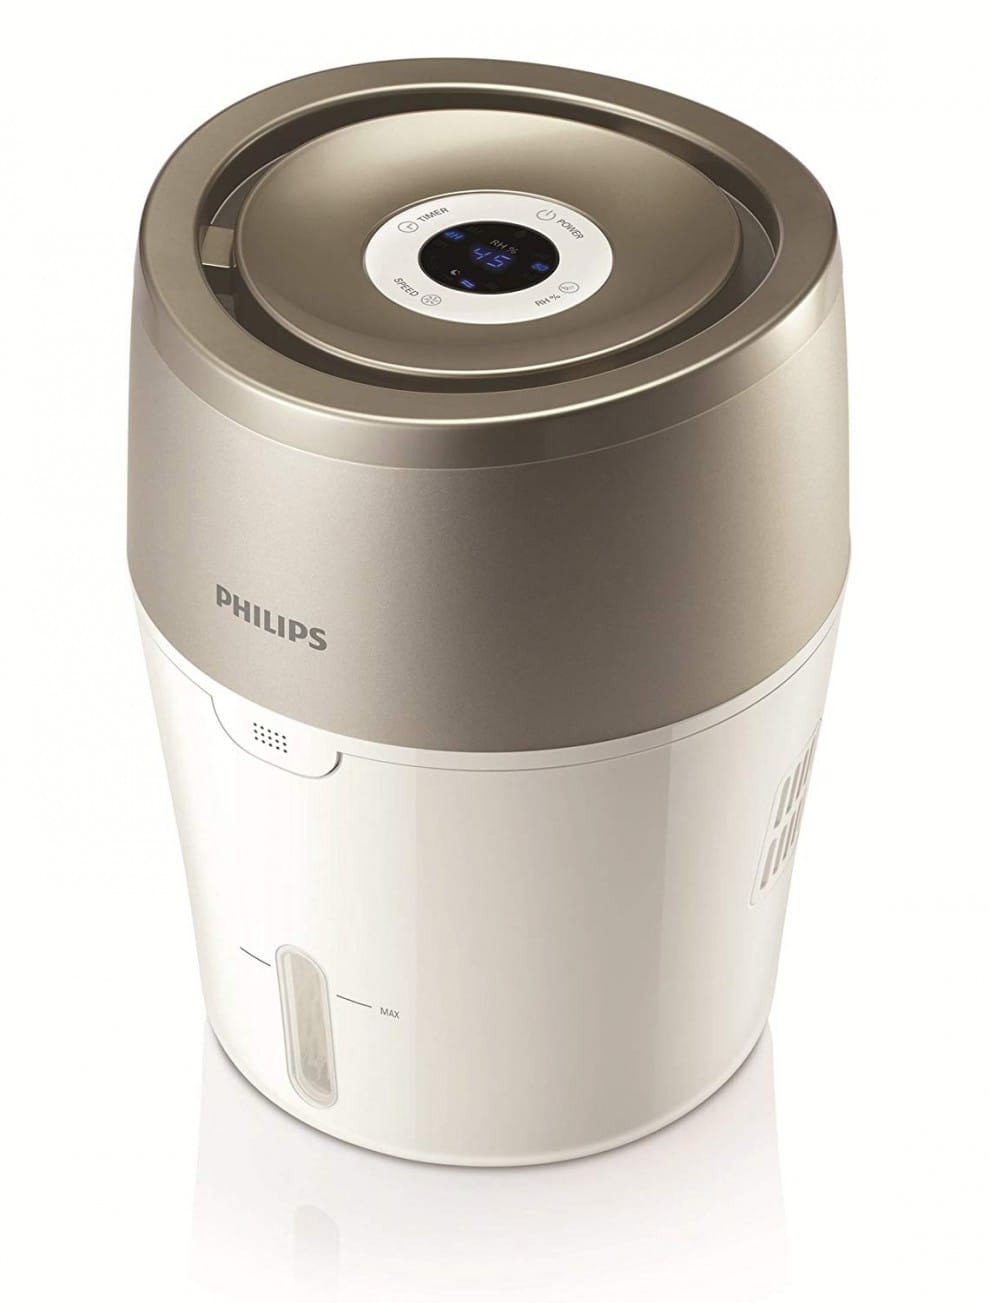 Philips humidificateur d'air blanc hu4803/01 - La Poste